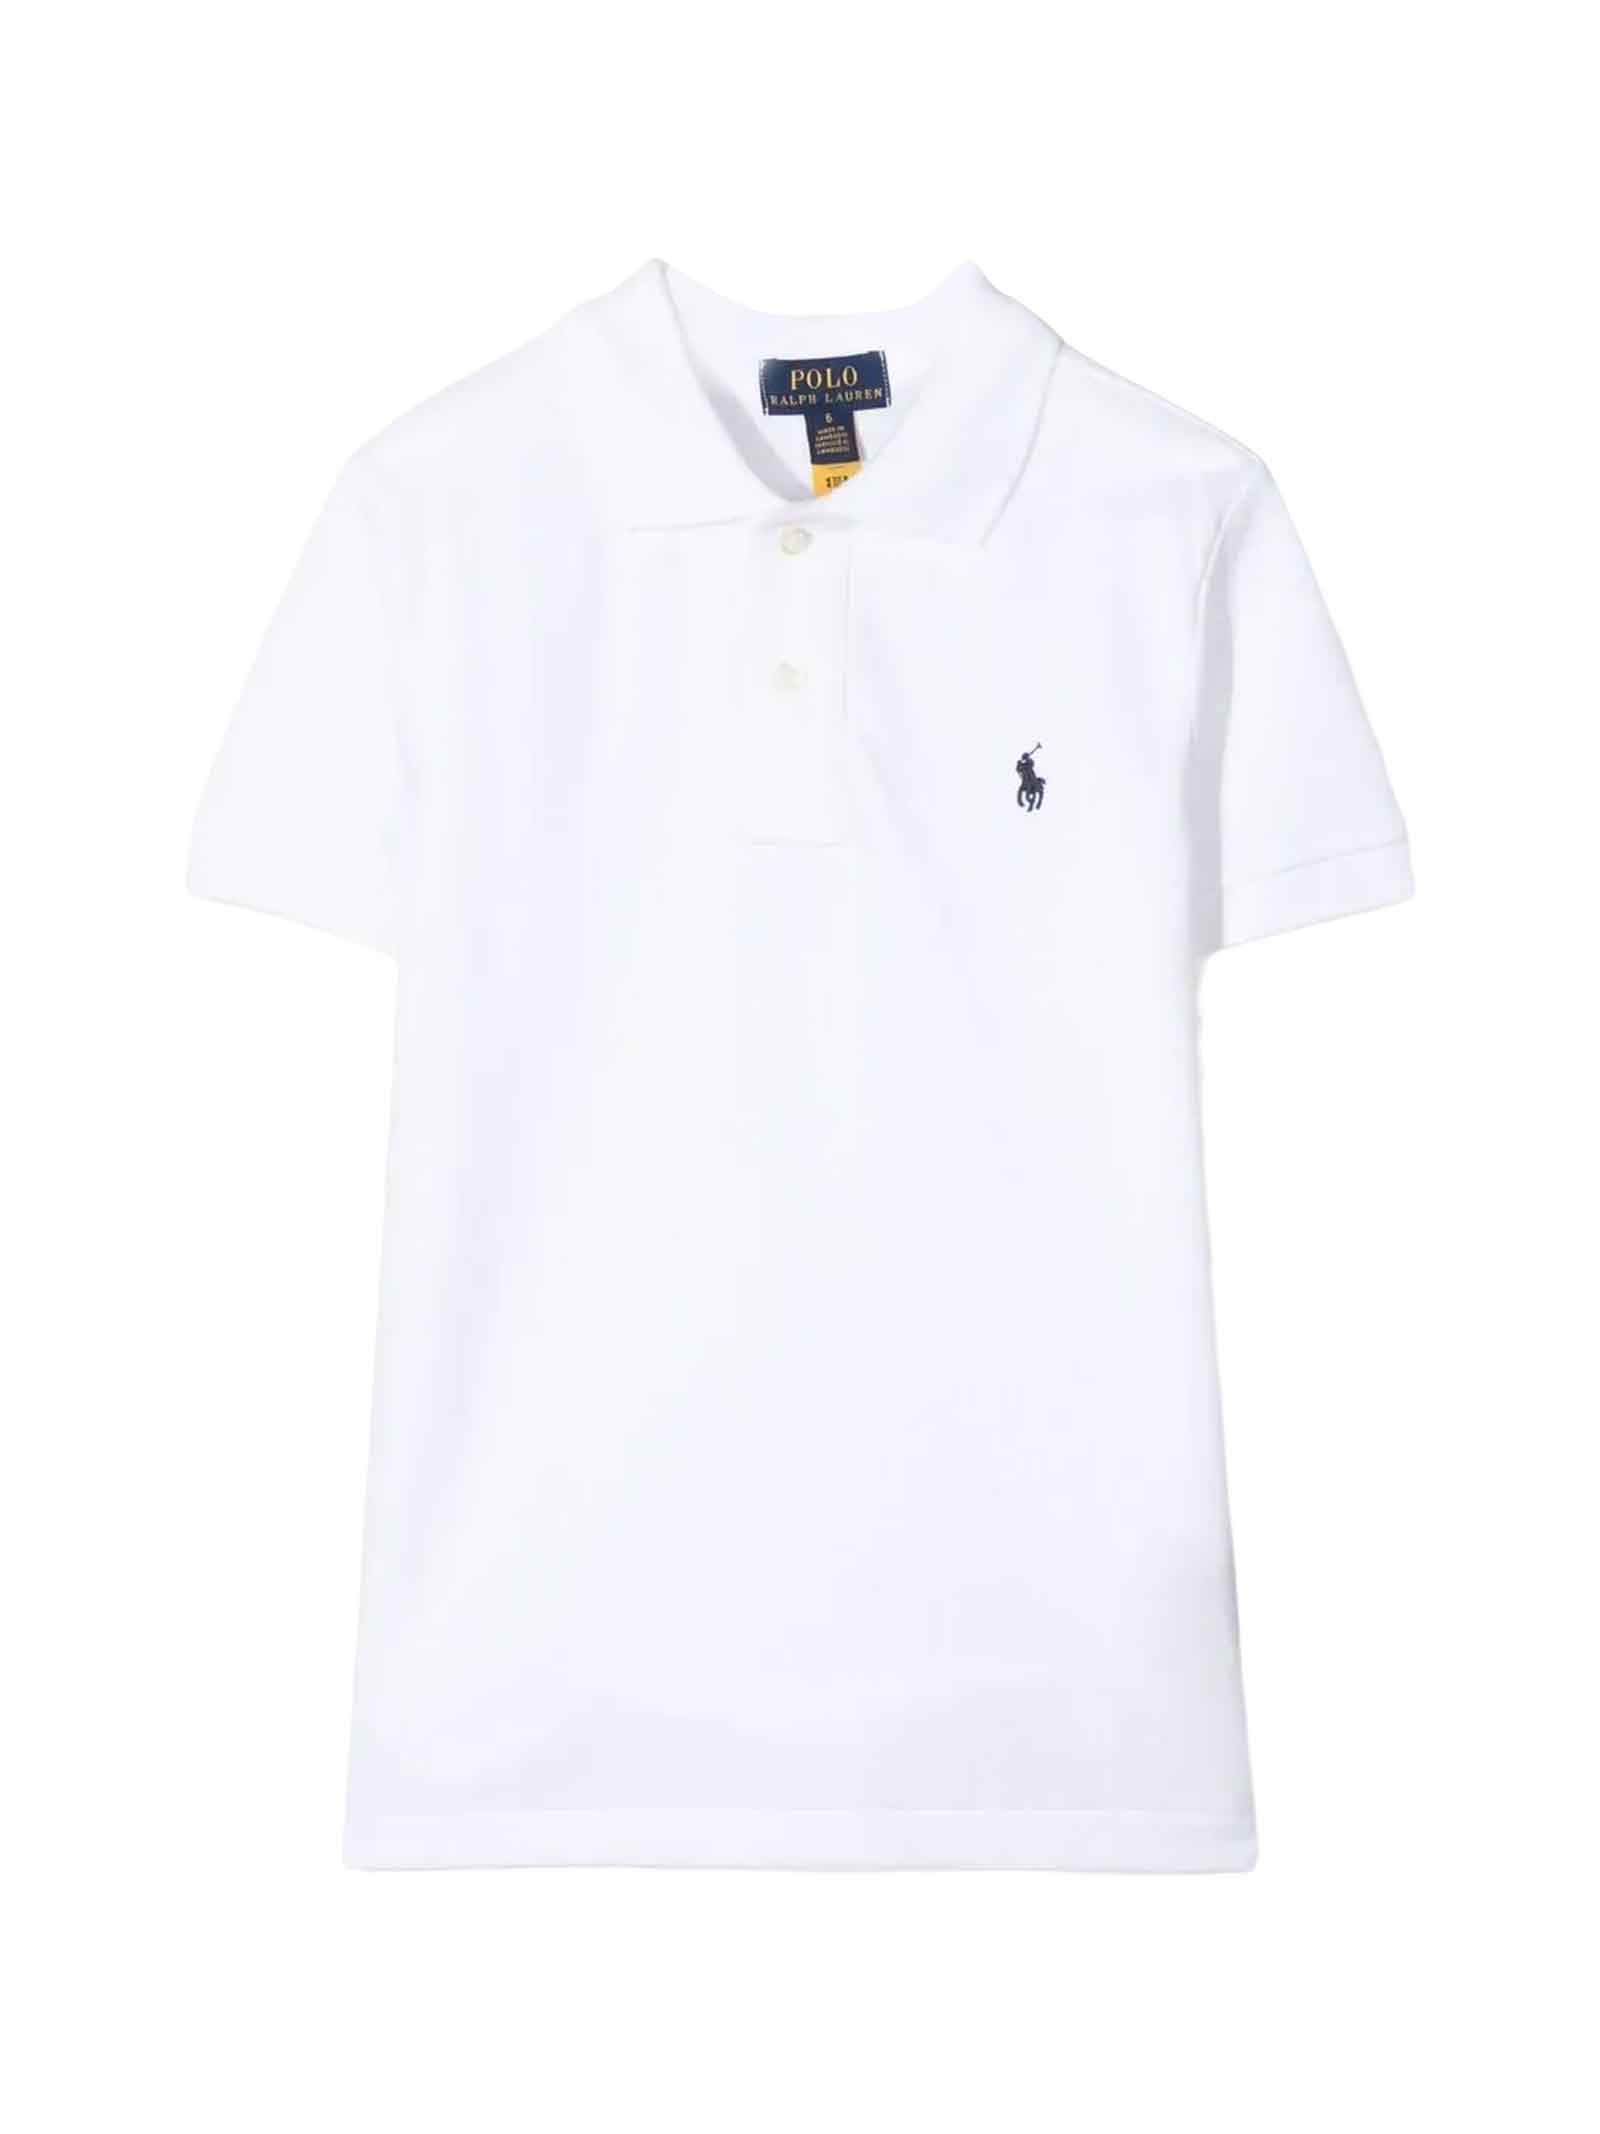 Ralph Lauren Kids' White Polo Shirt Boy